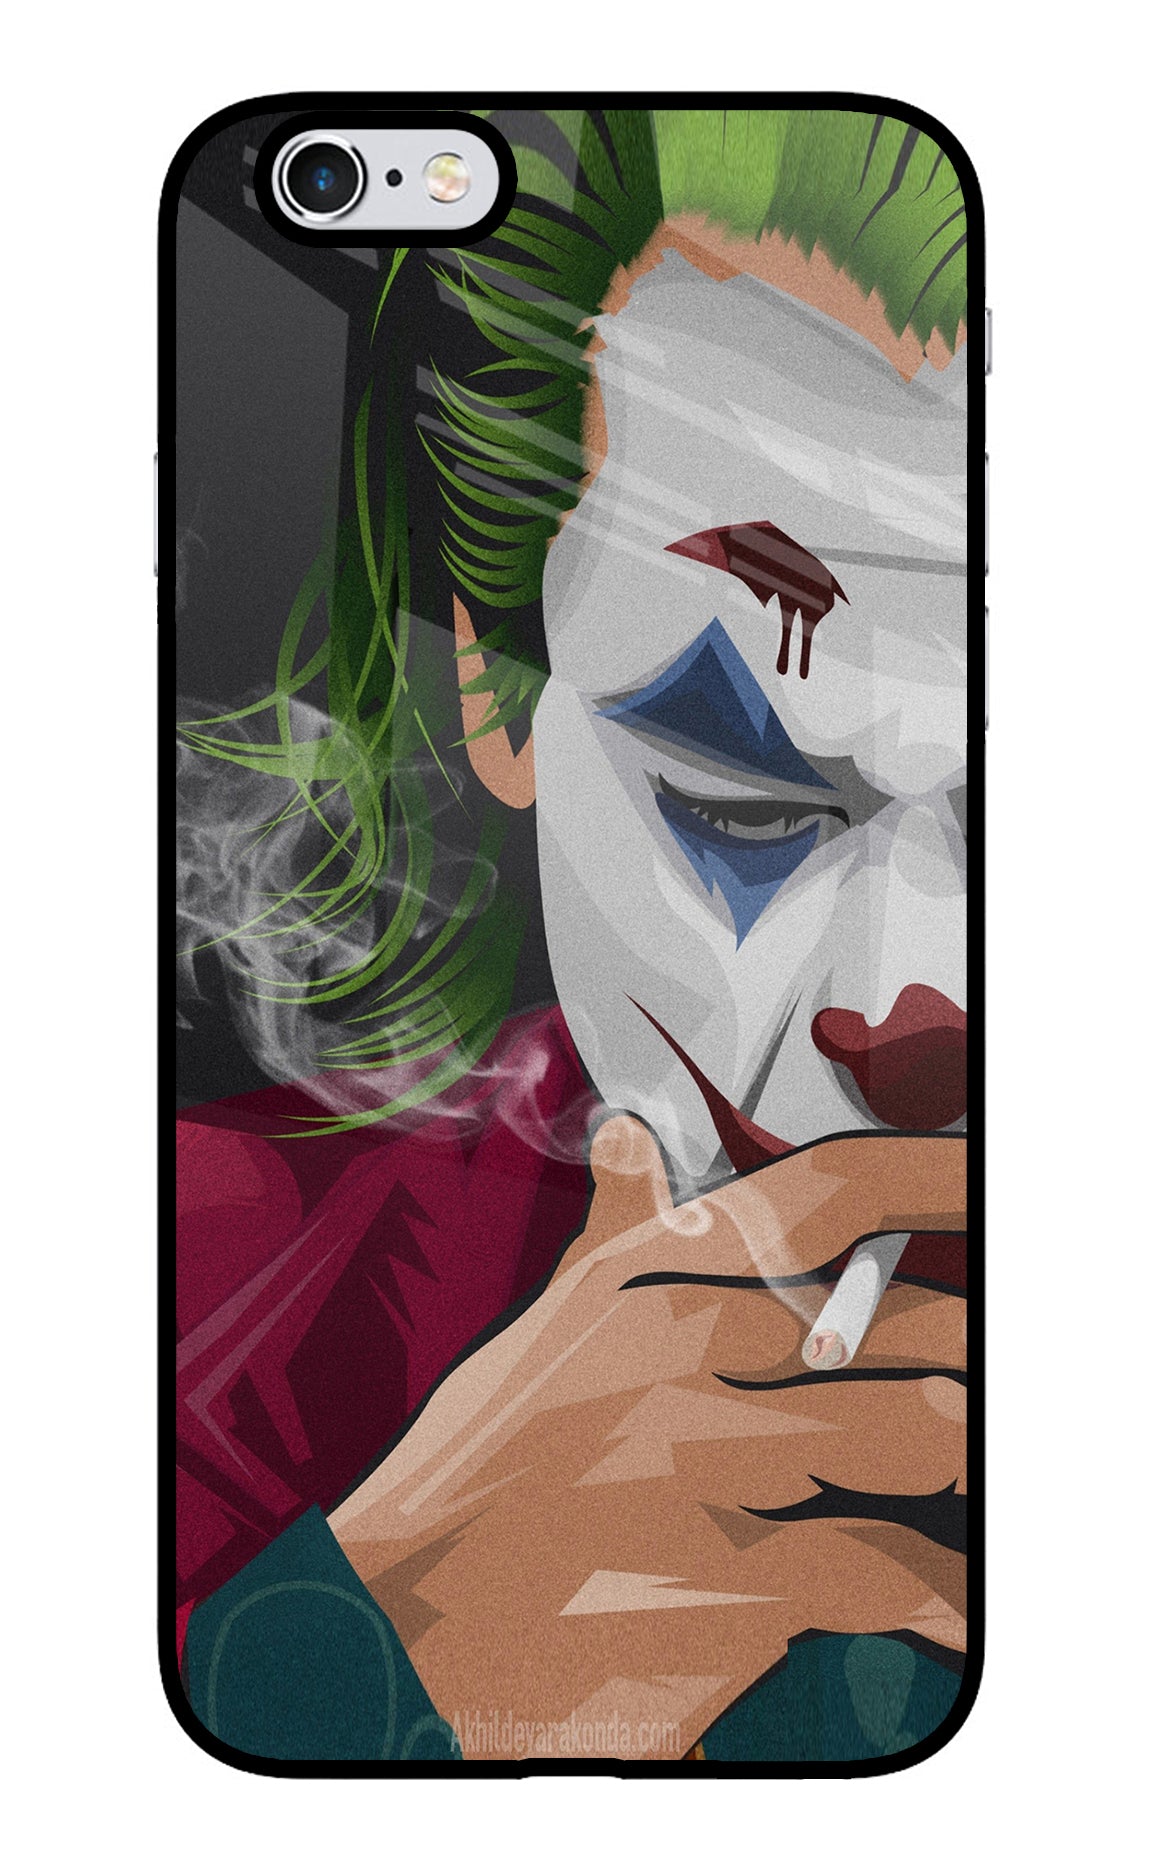 Joker Smoking iPhone 6/6s Glass Case